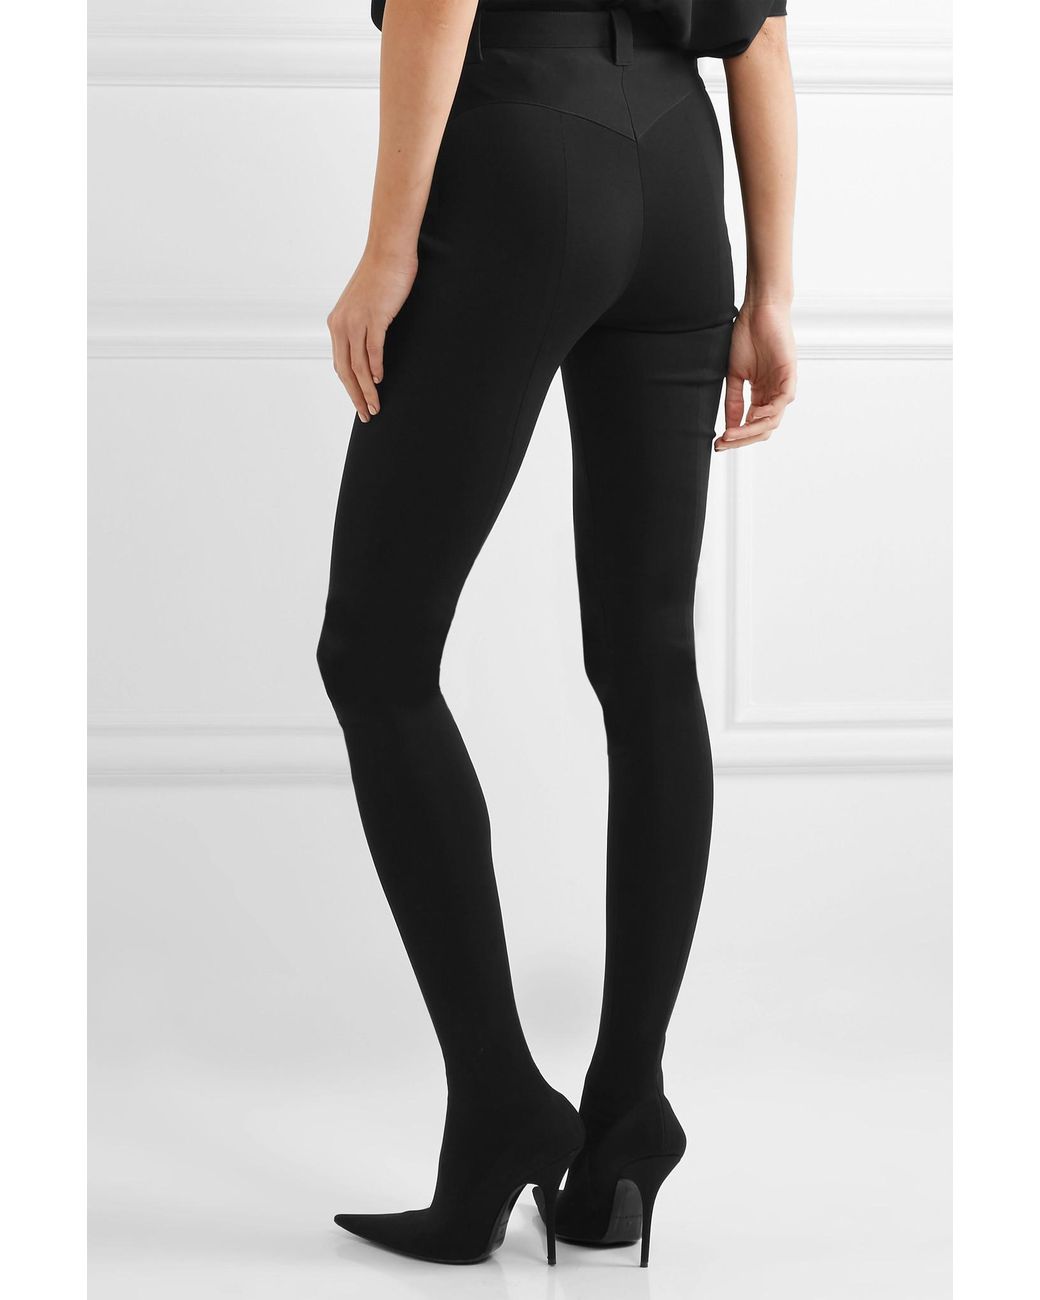 Balenciaga Cosmetic Pantashoe Spandex Skinny Pants in Black | Lyst